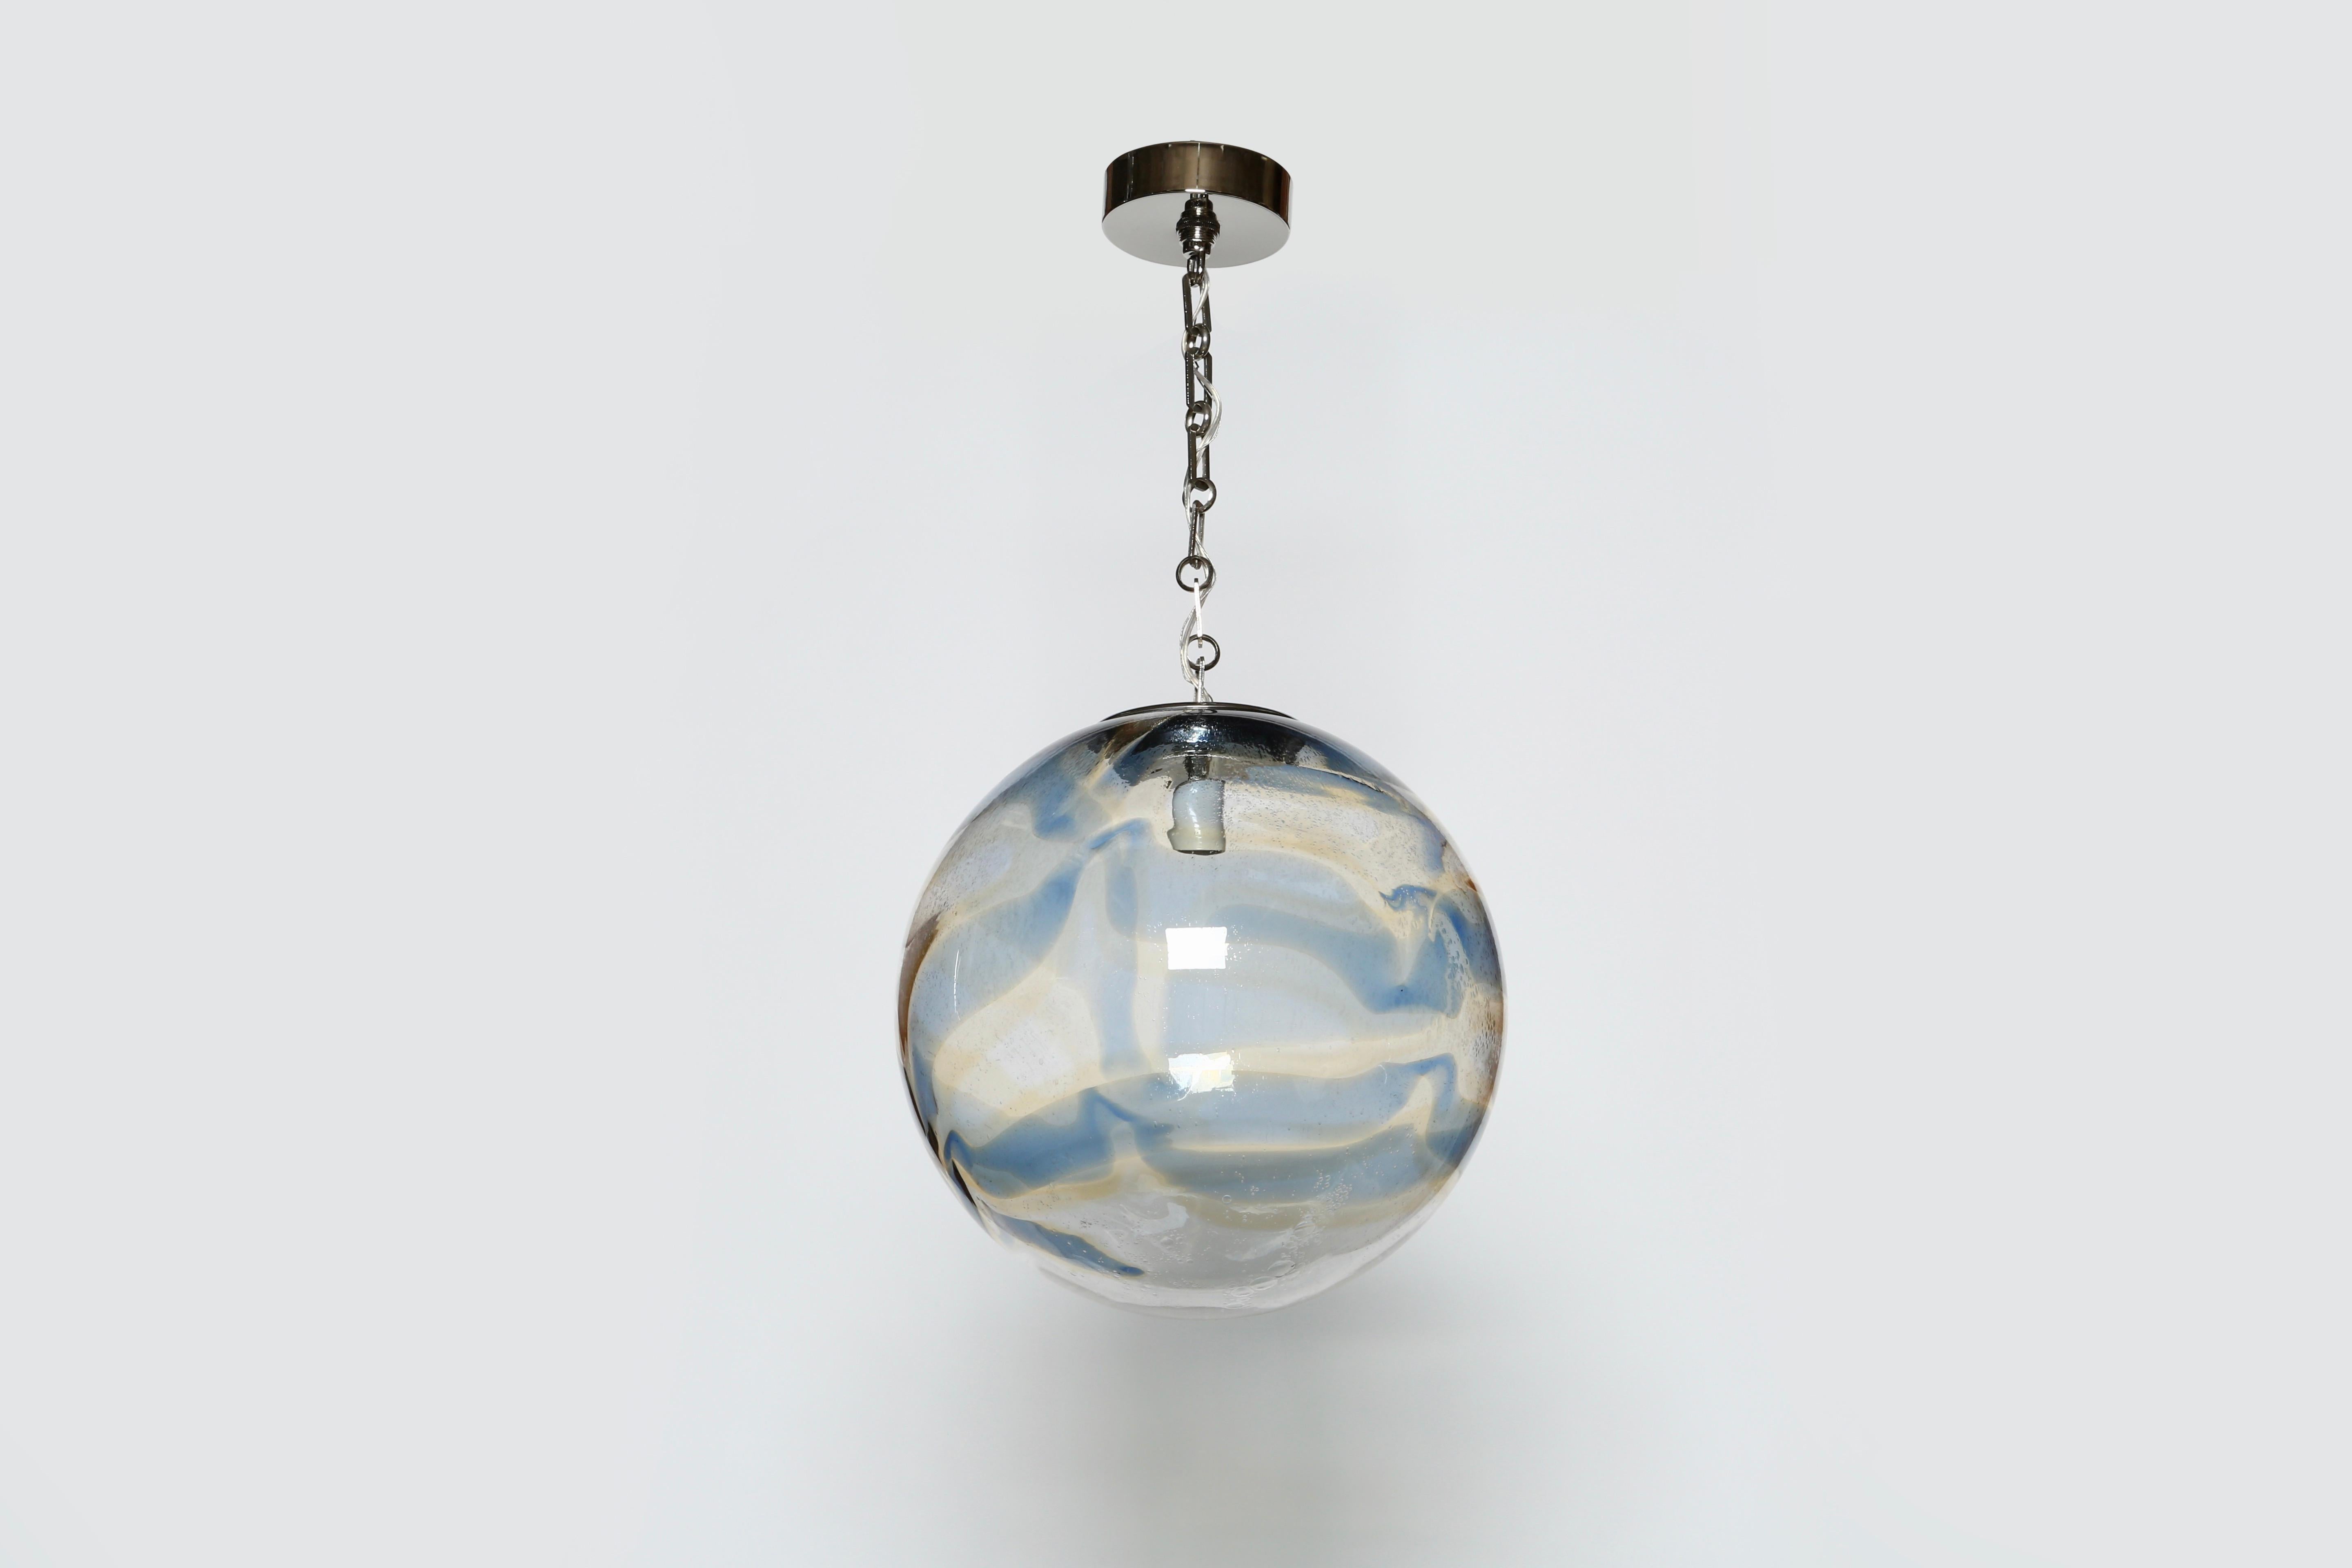 Murano glass globe ceiling pendant.
Italy, 1970s.
Hand blown glass, nickel-plated metal.
 